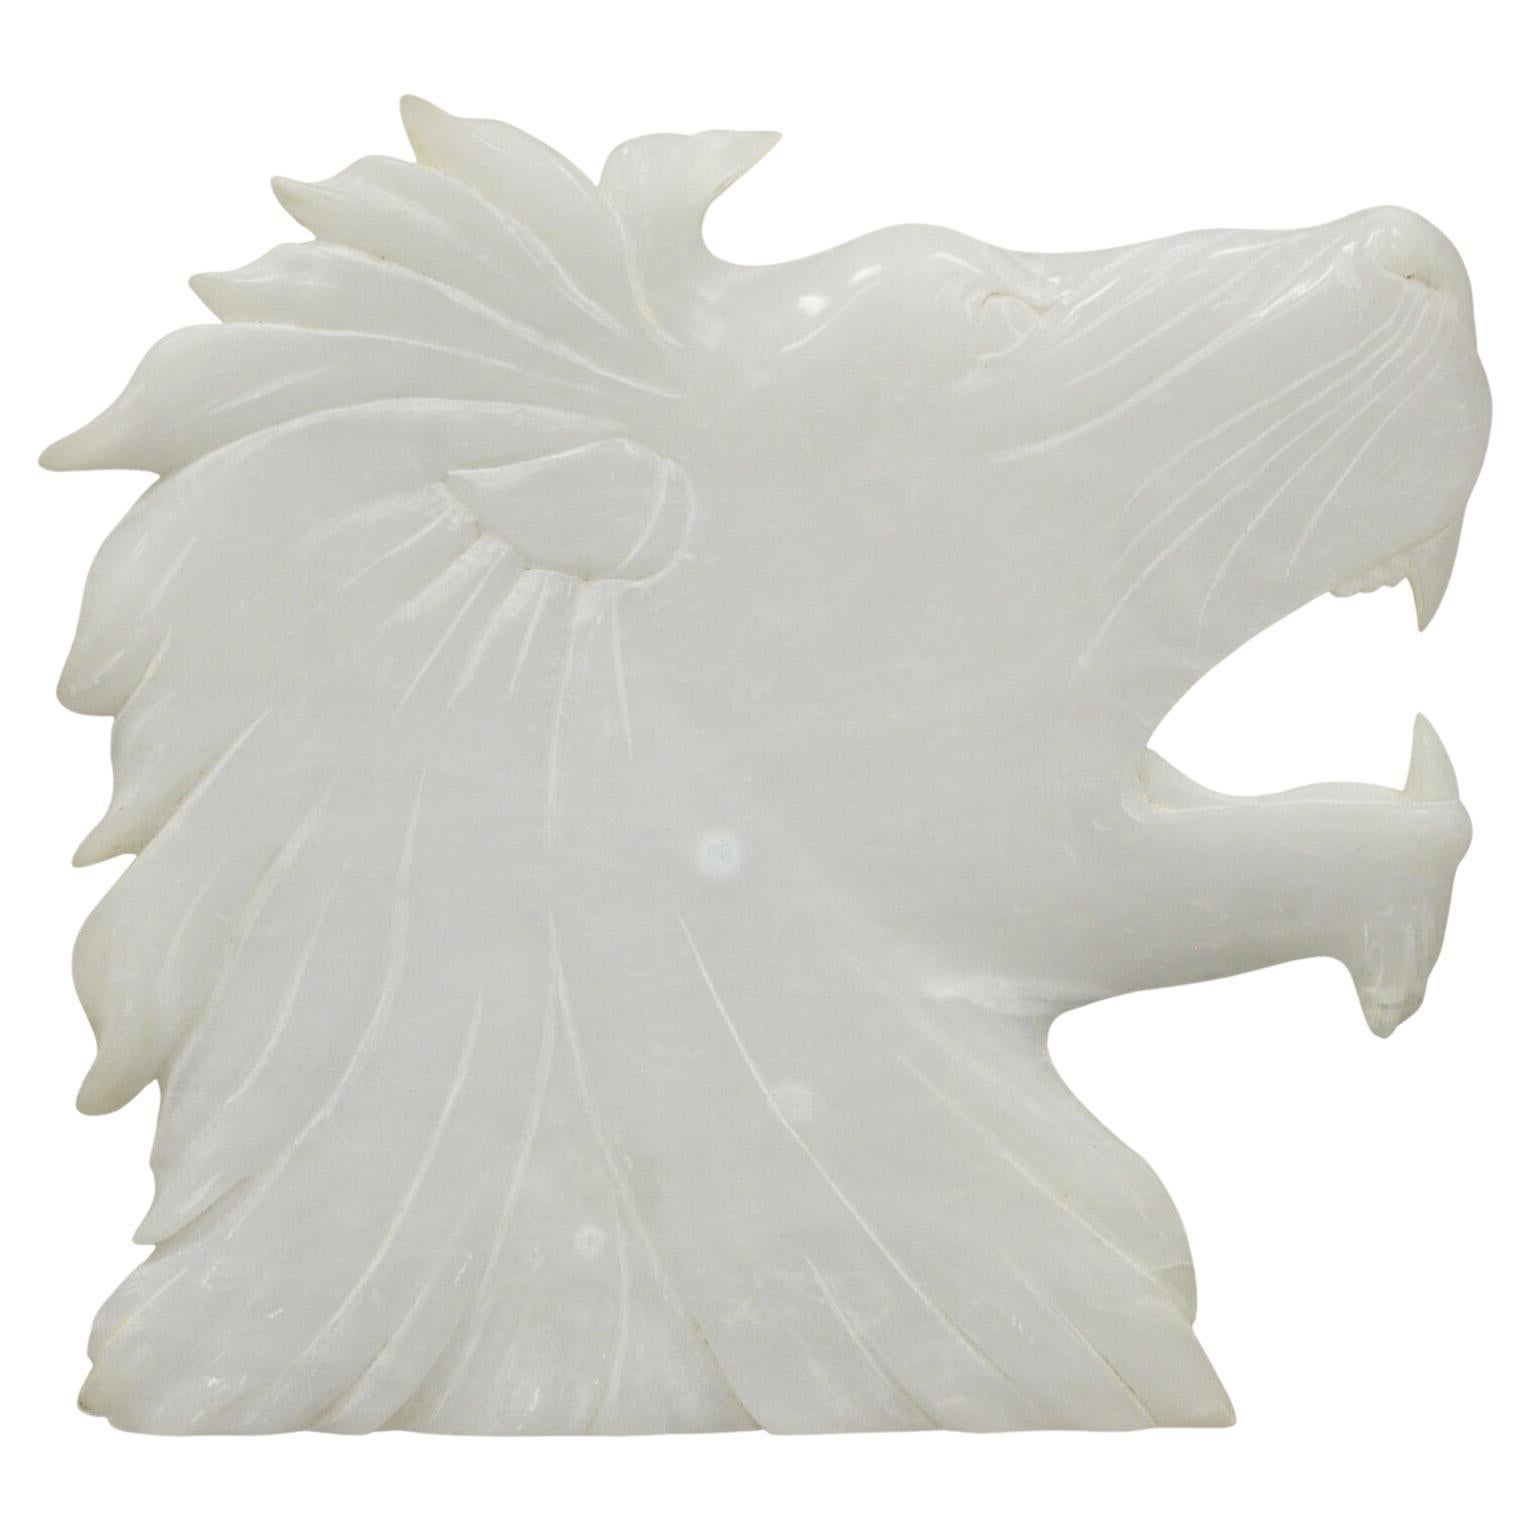 Vintage Italian Carved White Alabaster Lion Head Sculpture Statue Figure 'A' For Sale